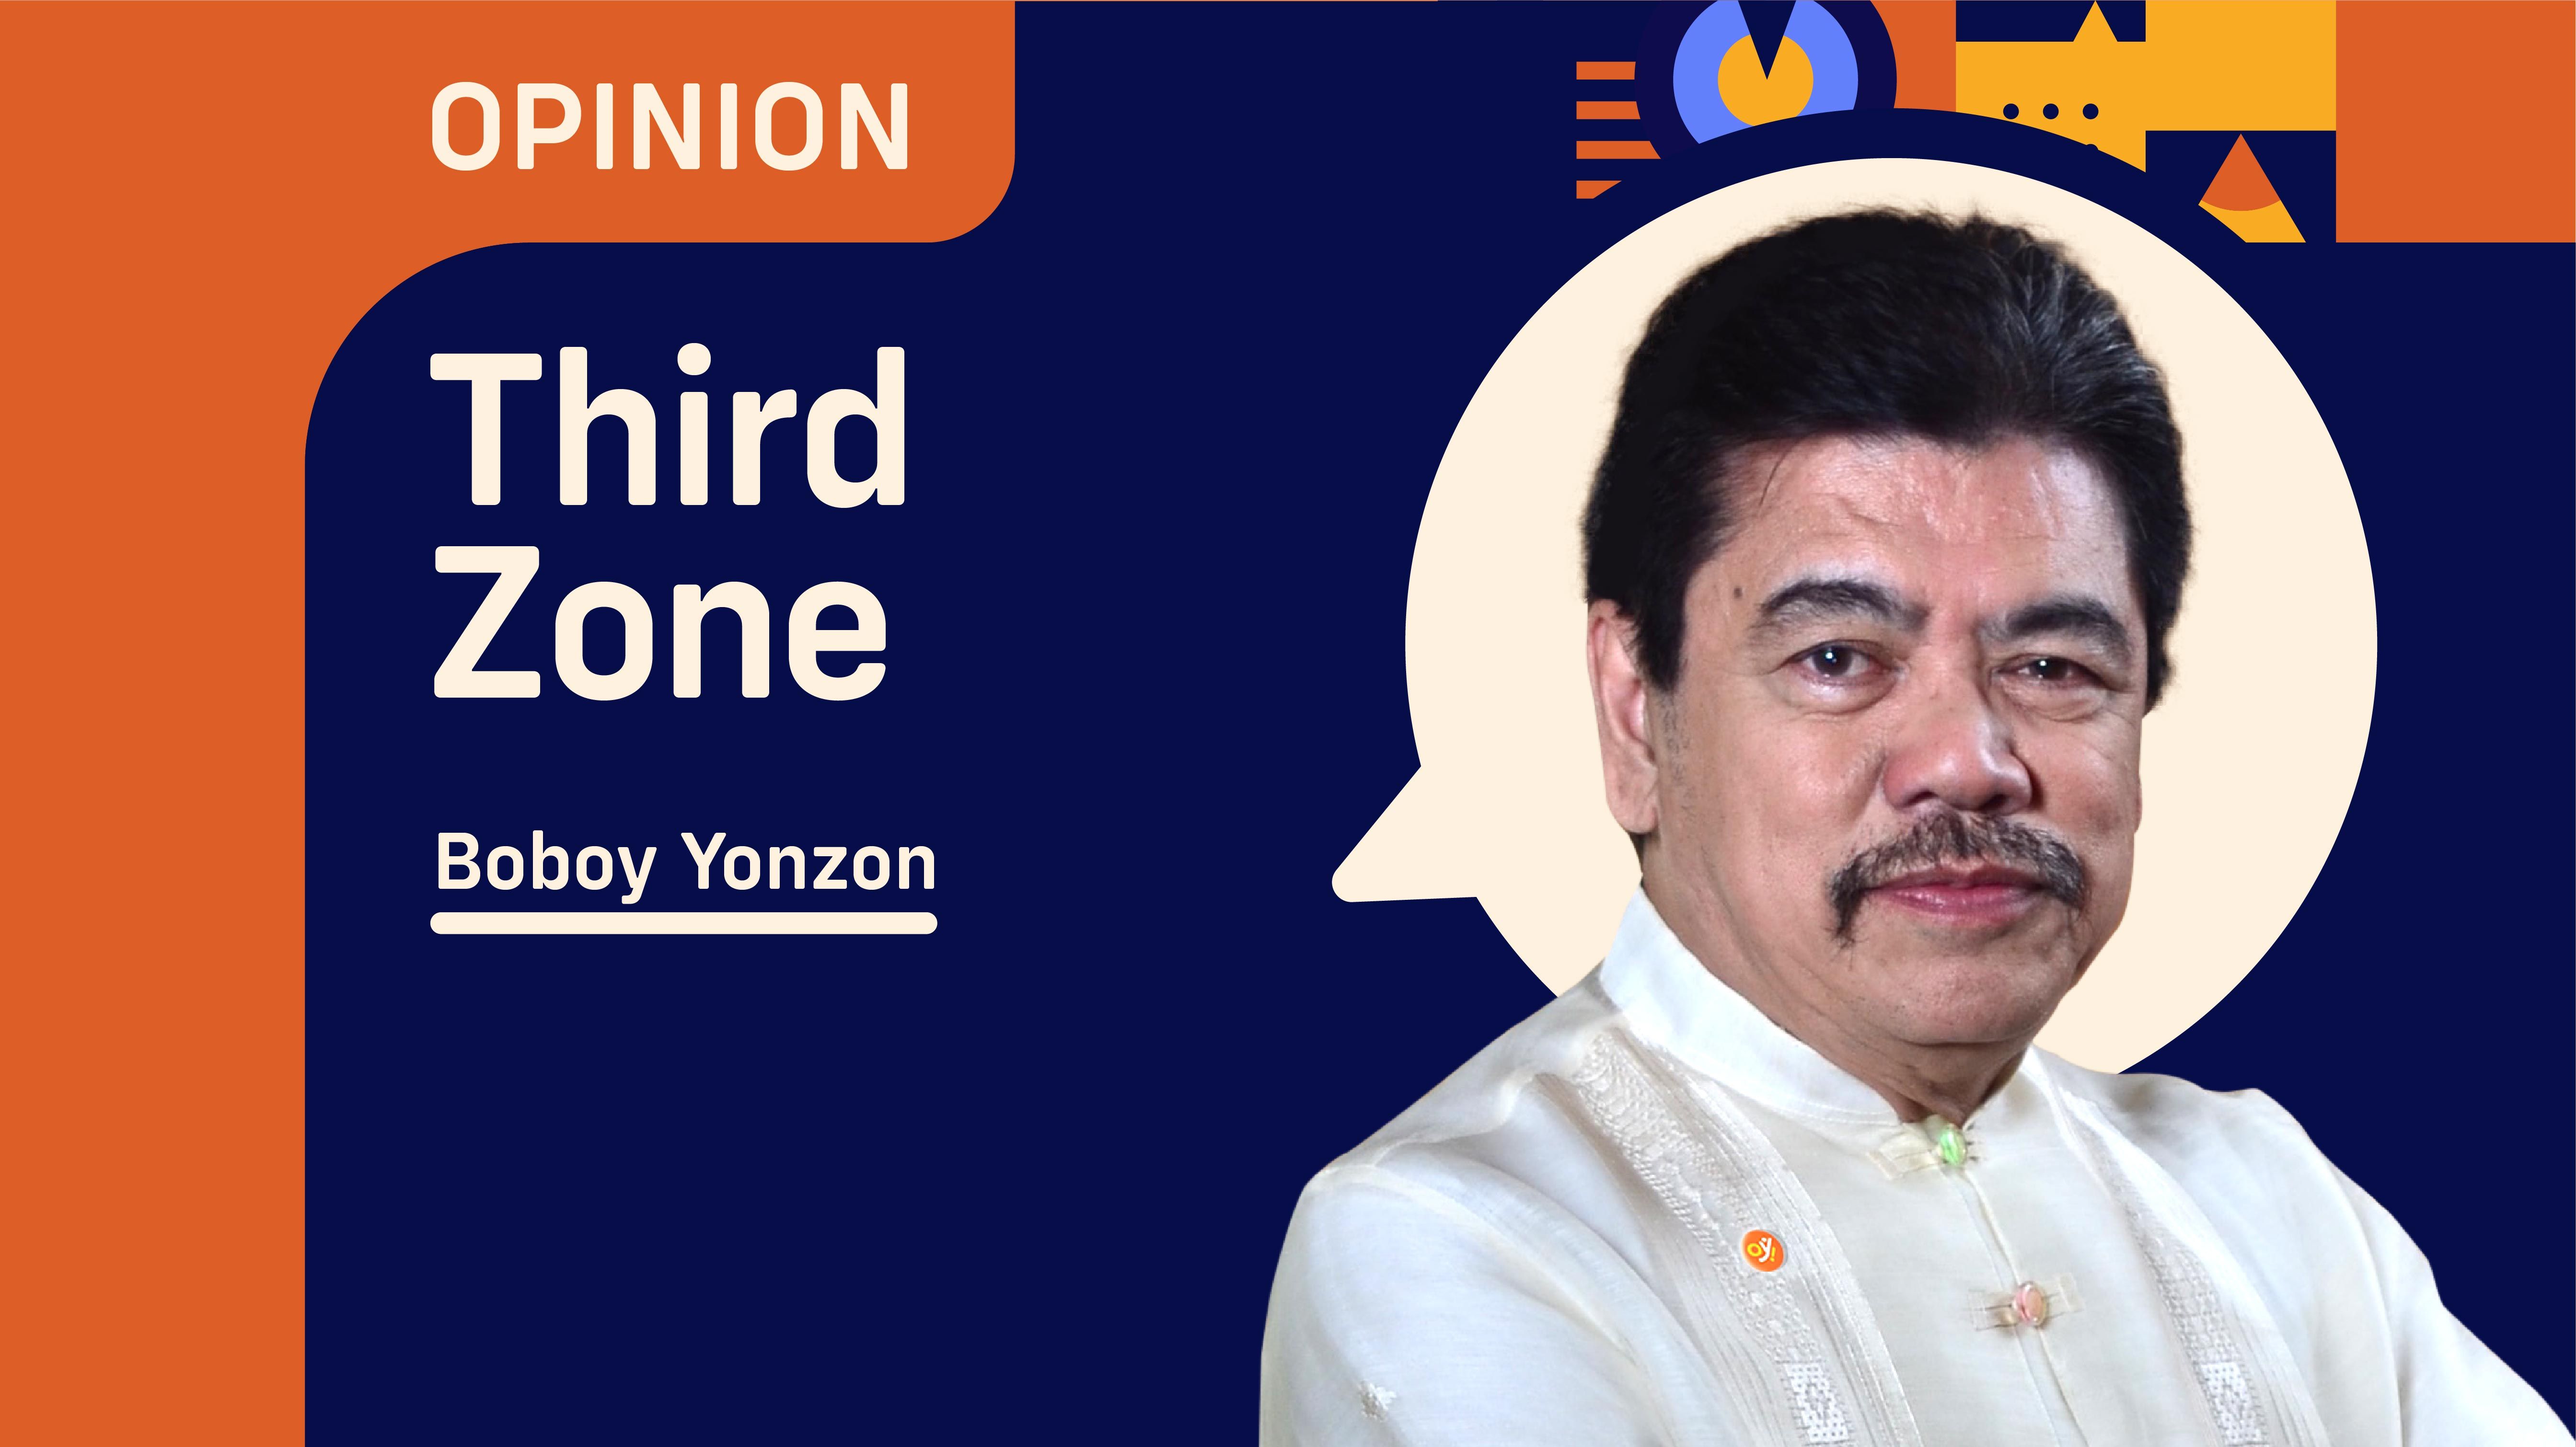 Third Zone by Boboy Yonzon